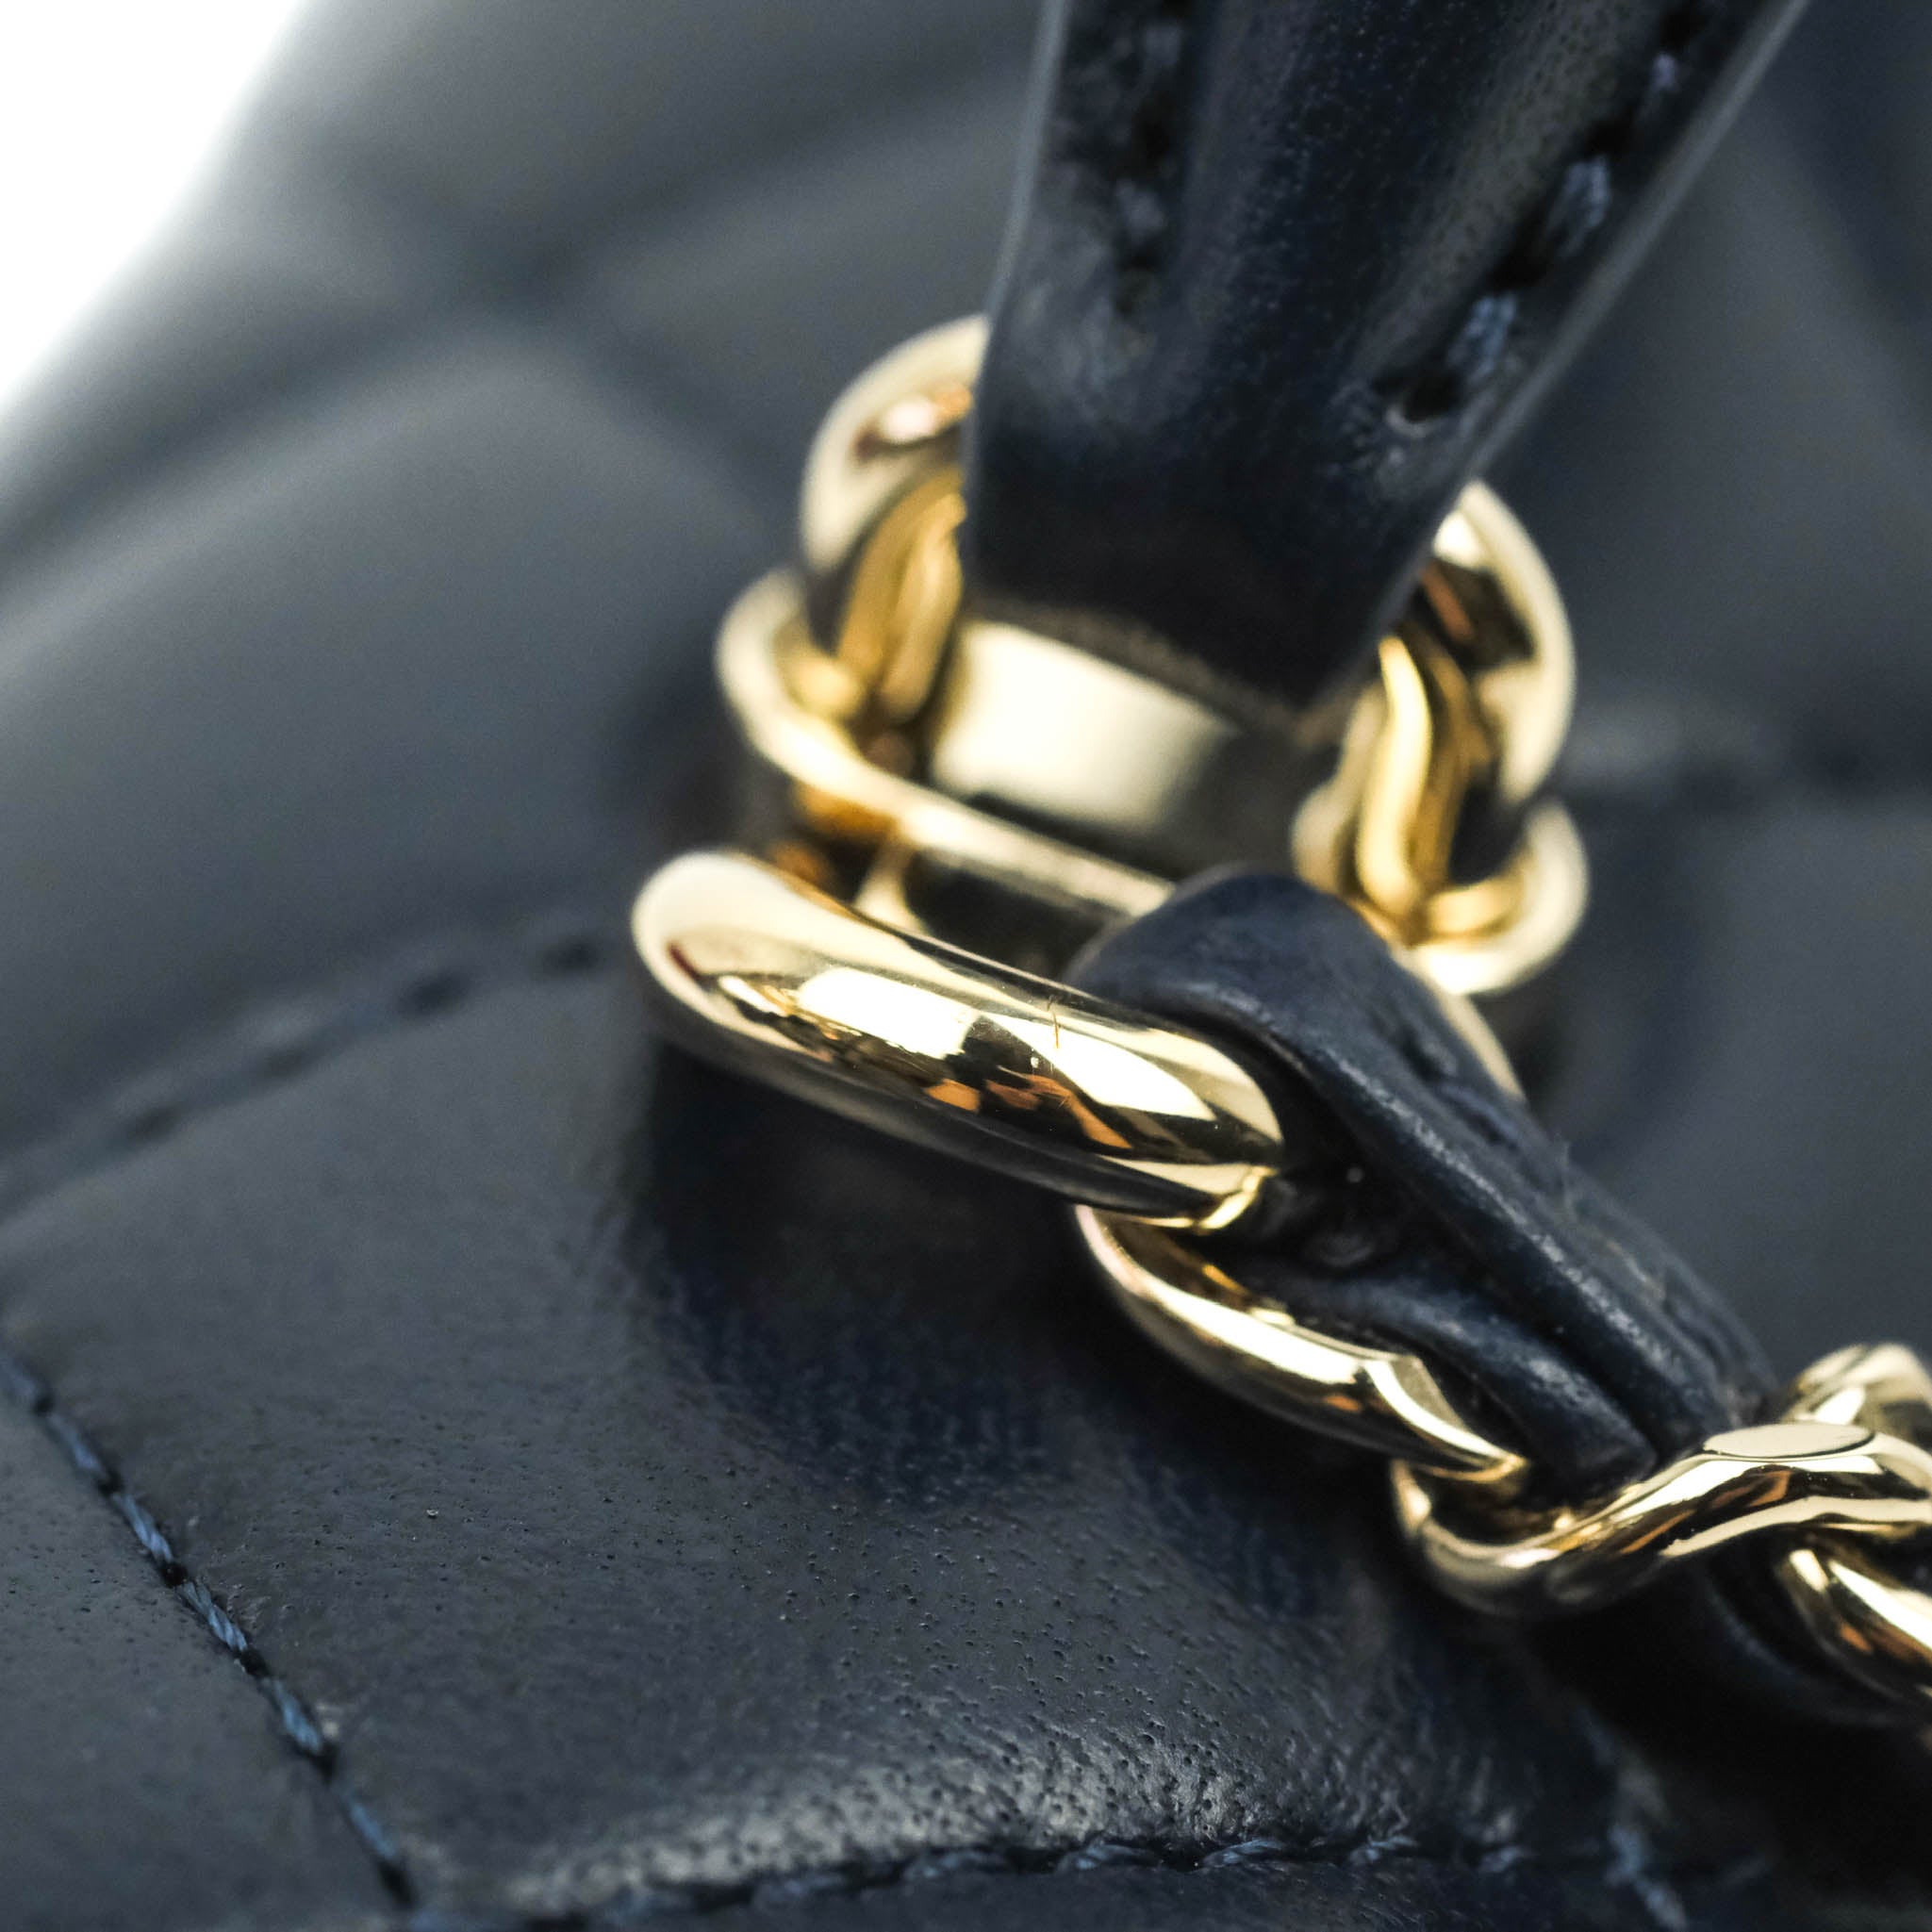 Chanel Top Handle Mini Rectangular Flap Bag Light Blue Lambskin Gold H – Coco  Approved Studio